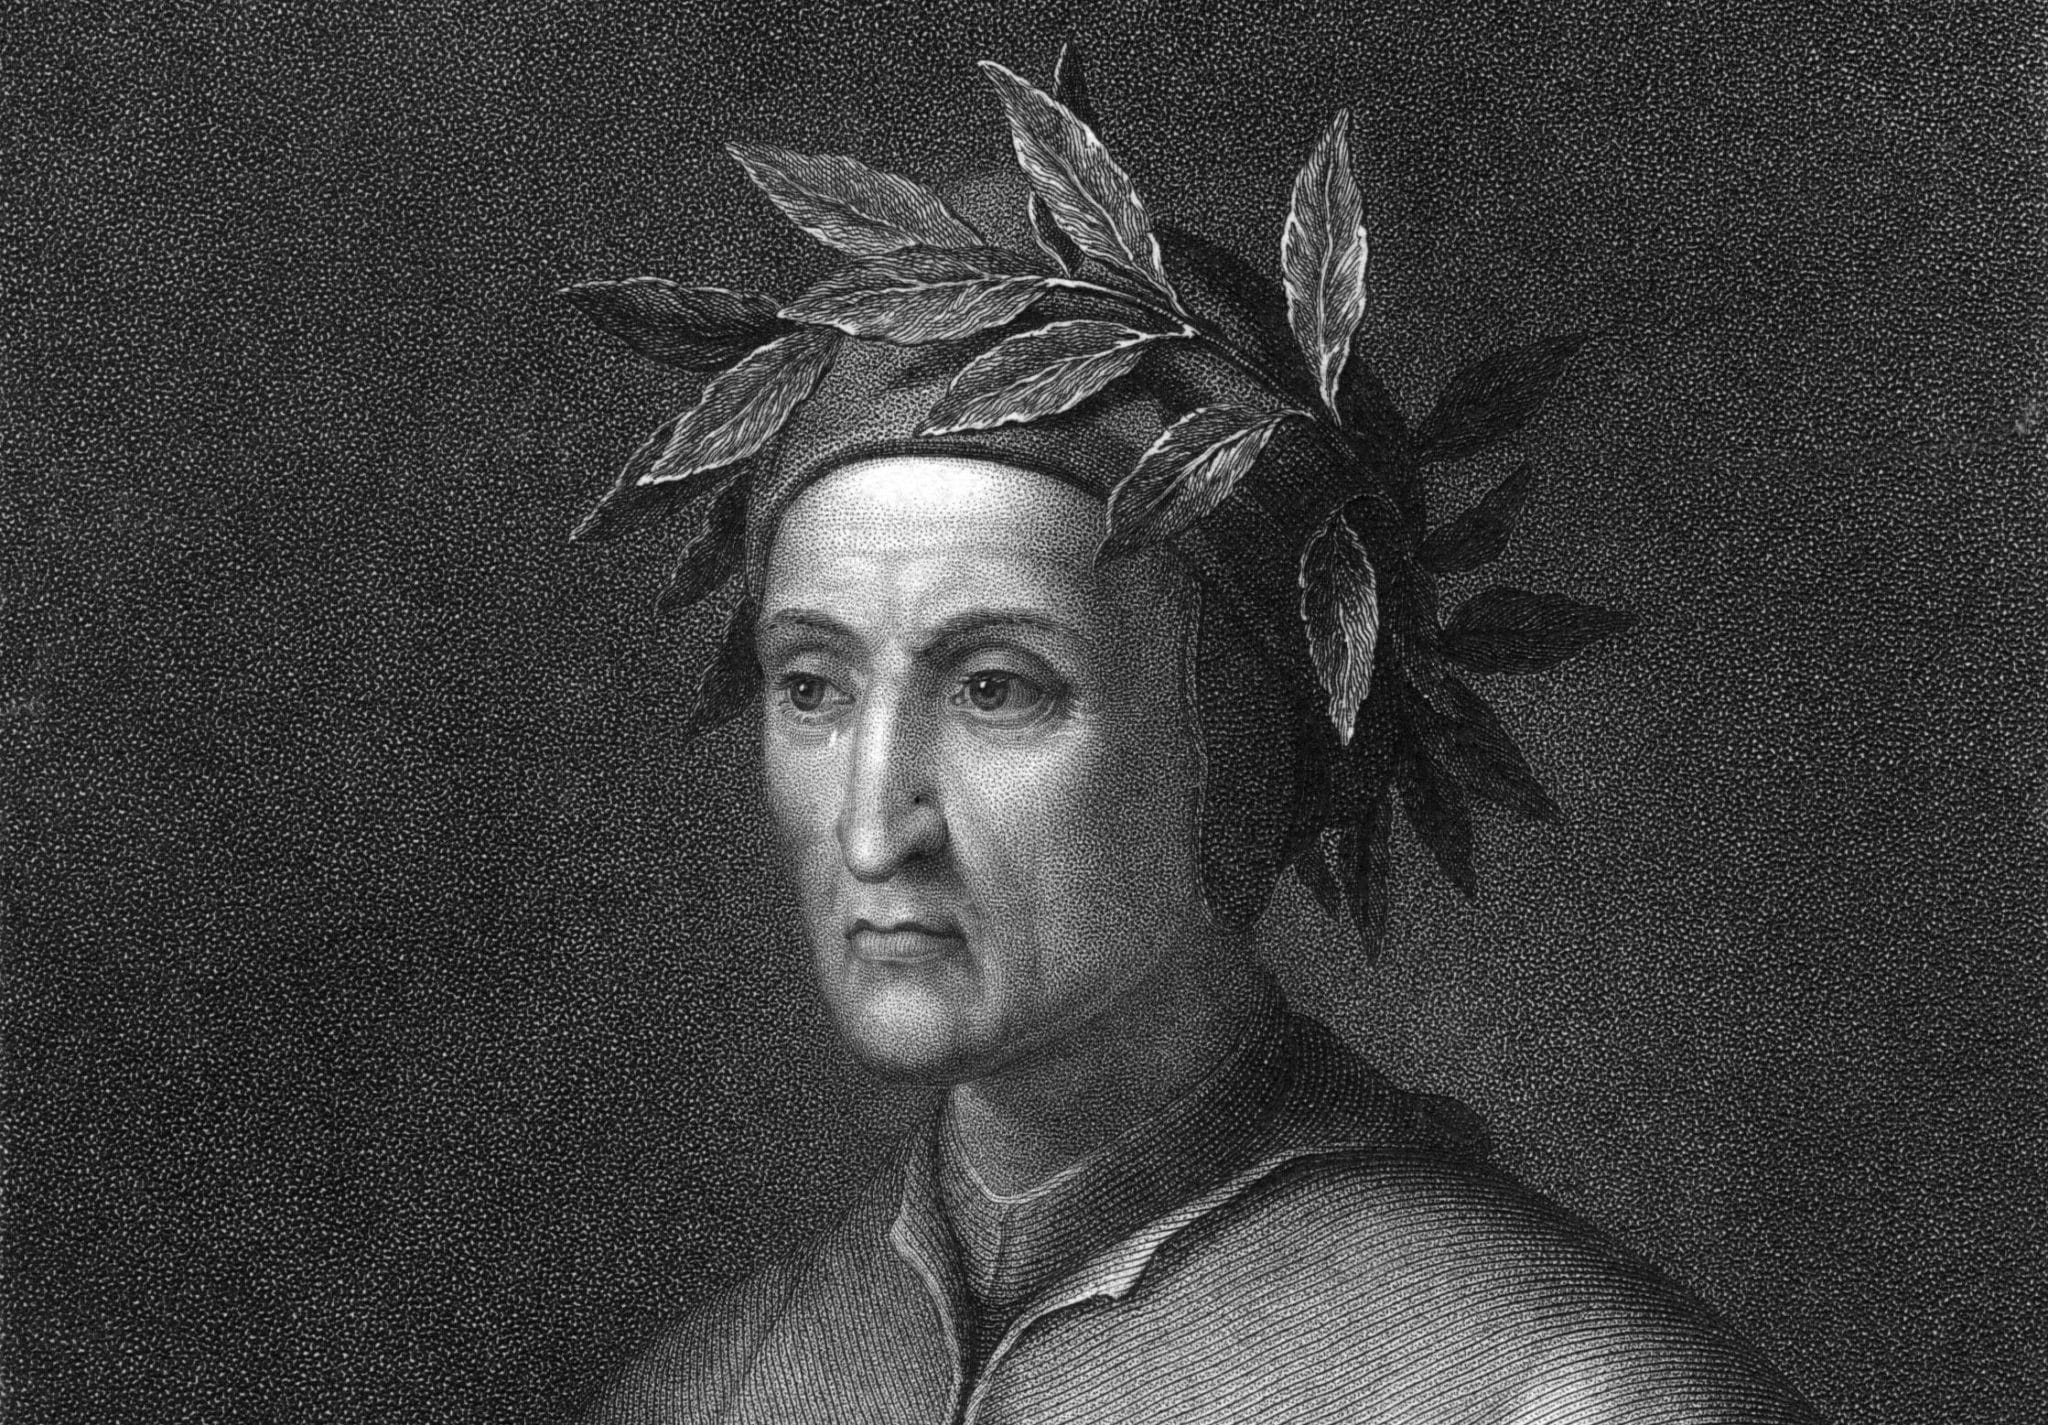 image-of-italian-poet-dante-alighieri-circa-1300